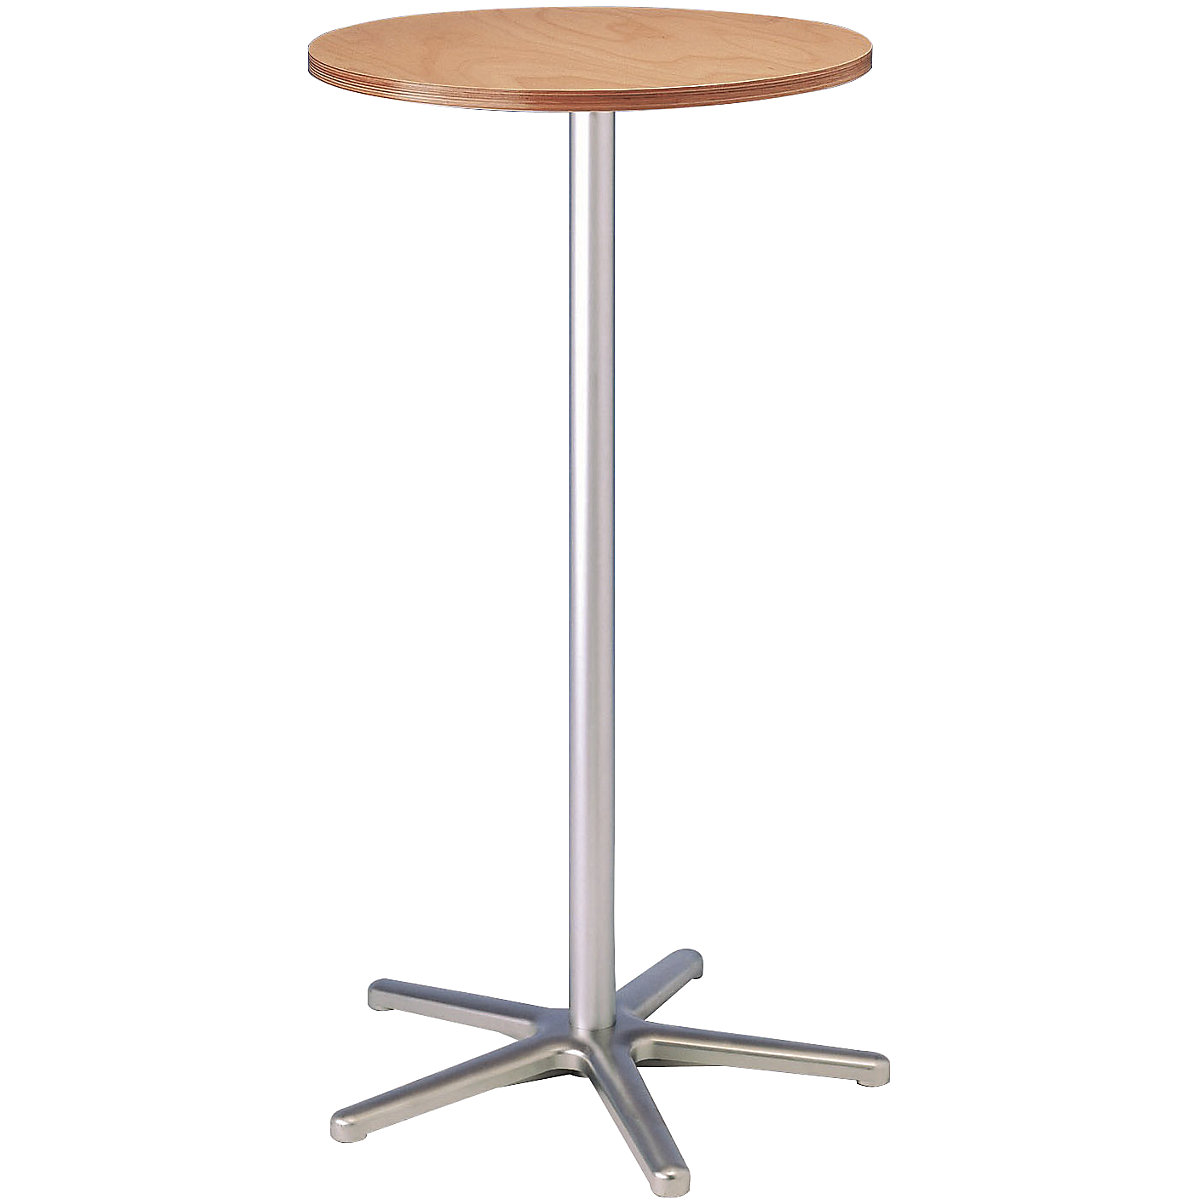 Pedestal table, Ø 600 mm - MAUL